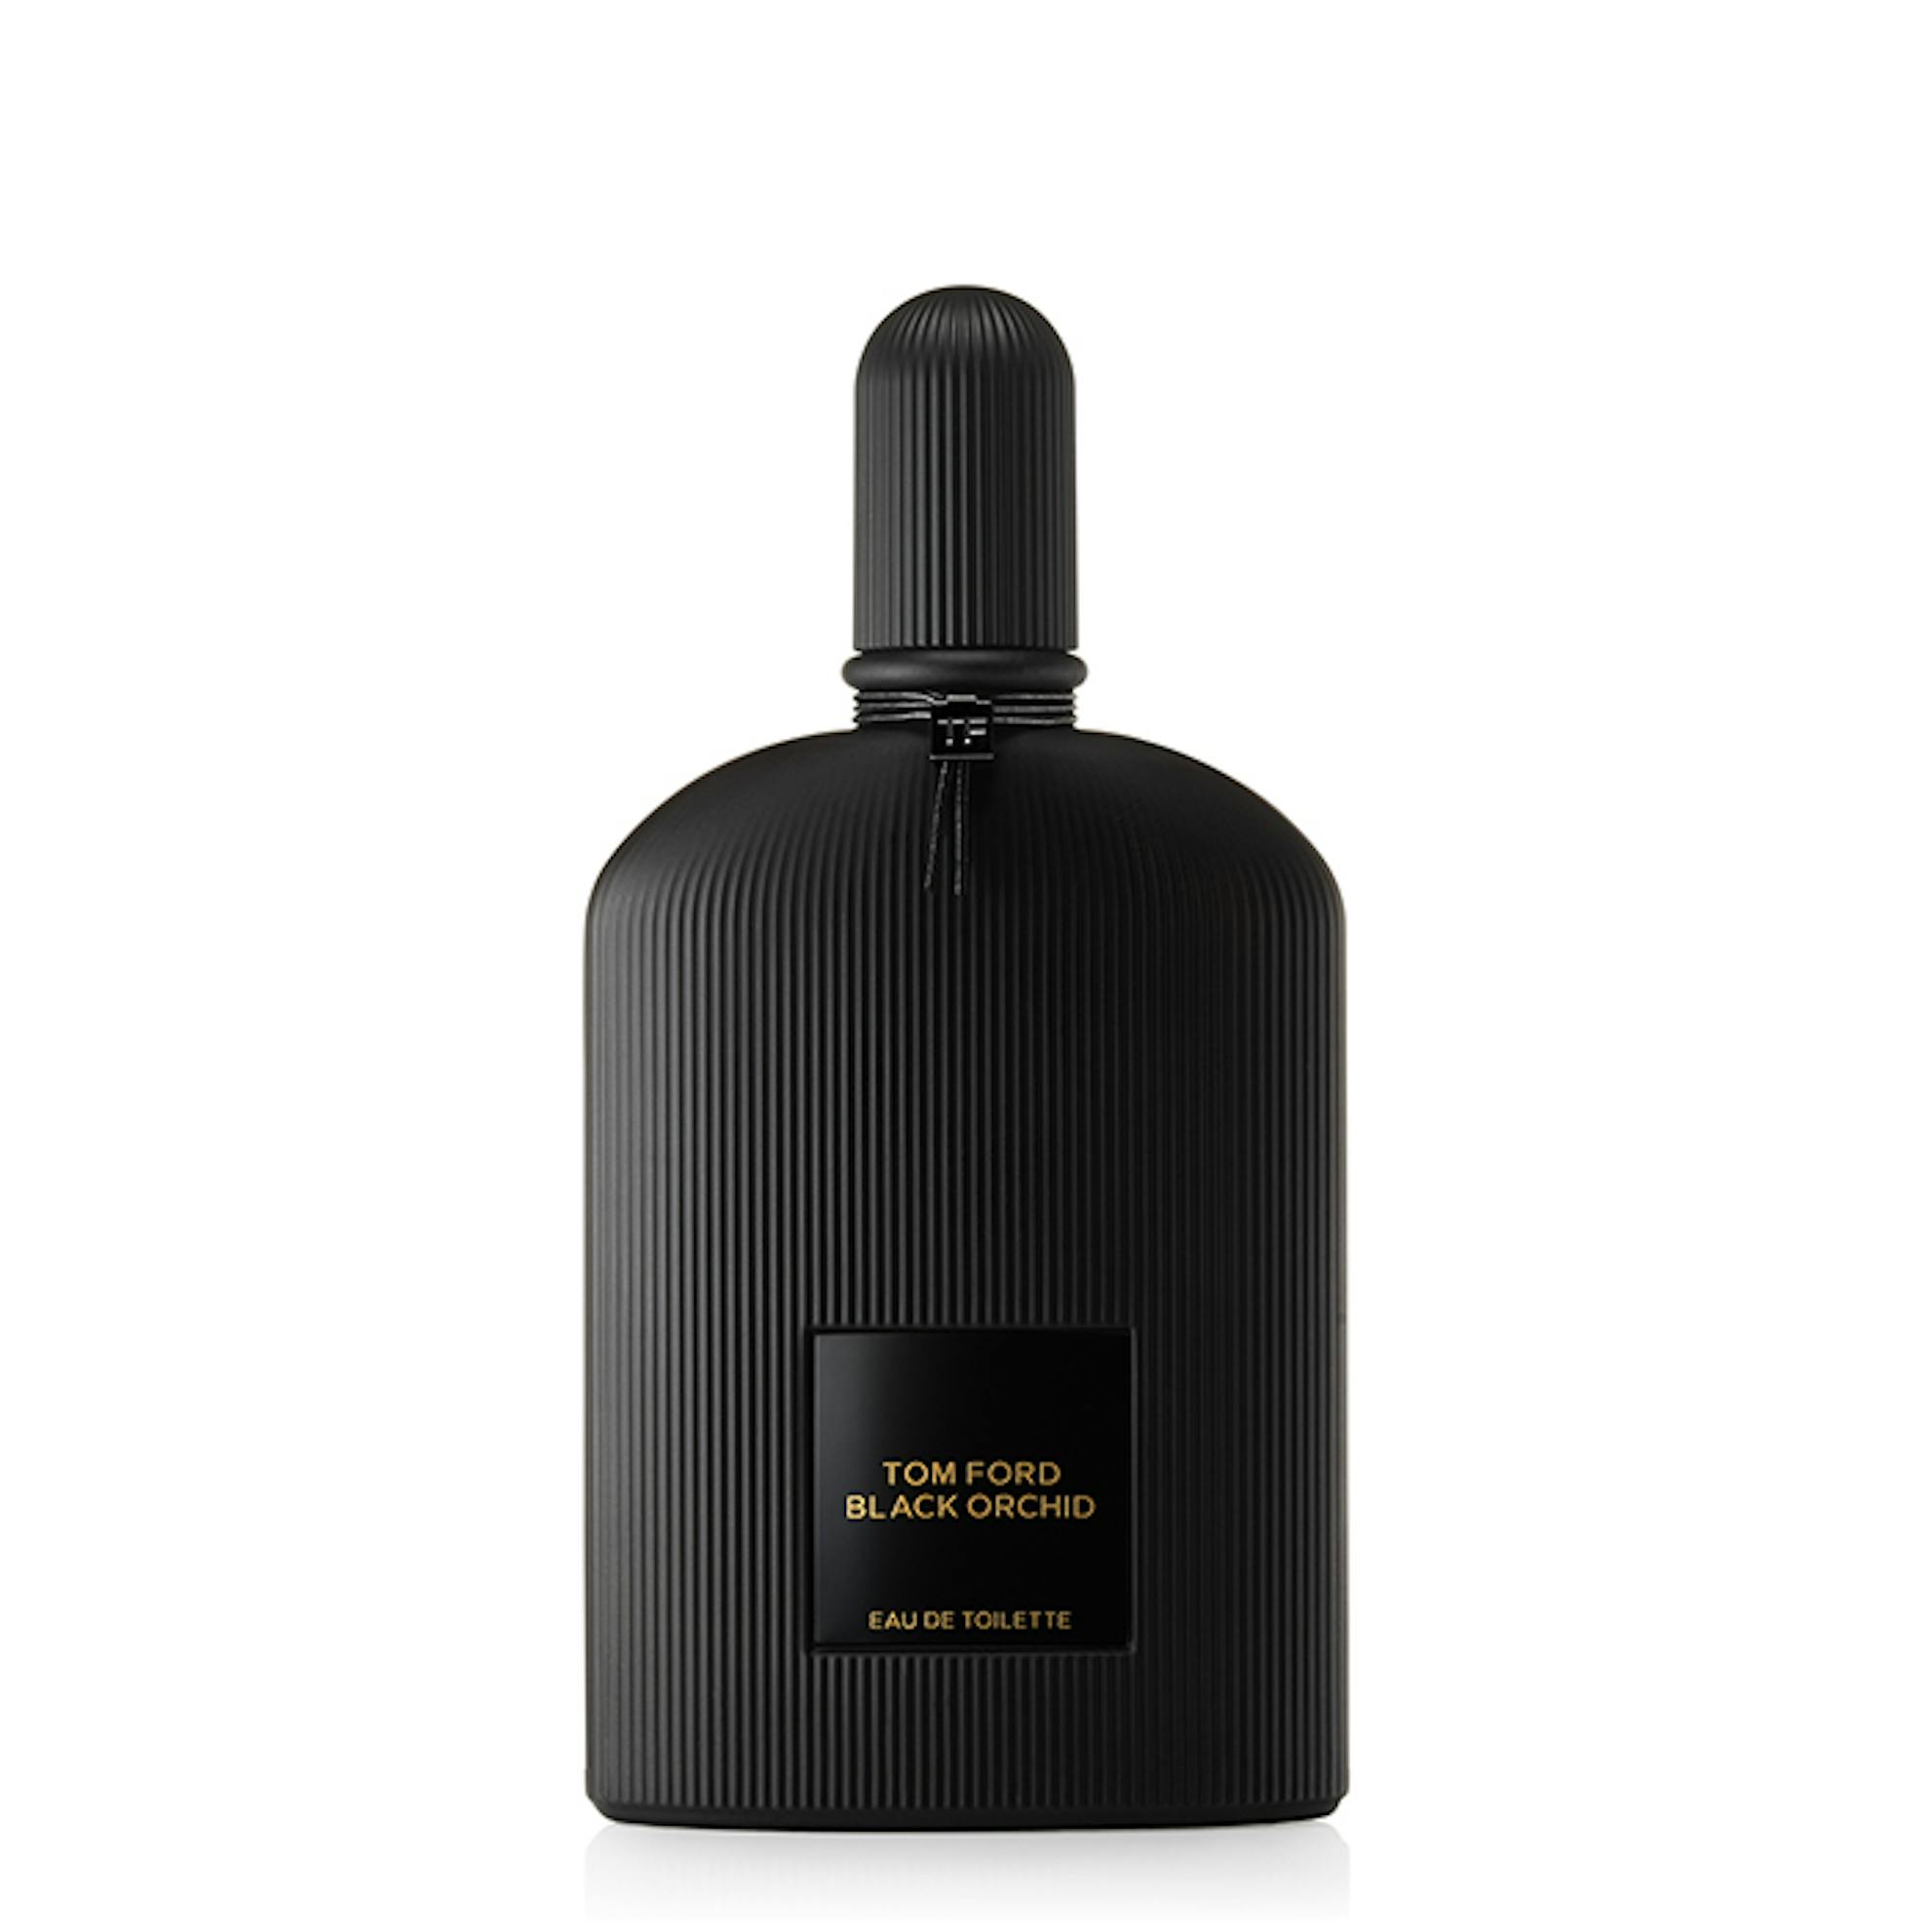 Tom Ford Black Orchid Eau De Toilette 100ml Spray | The Fragrance Shop